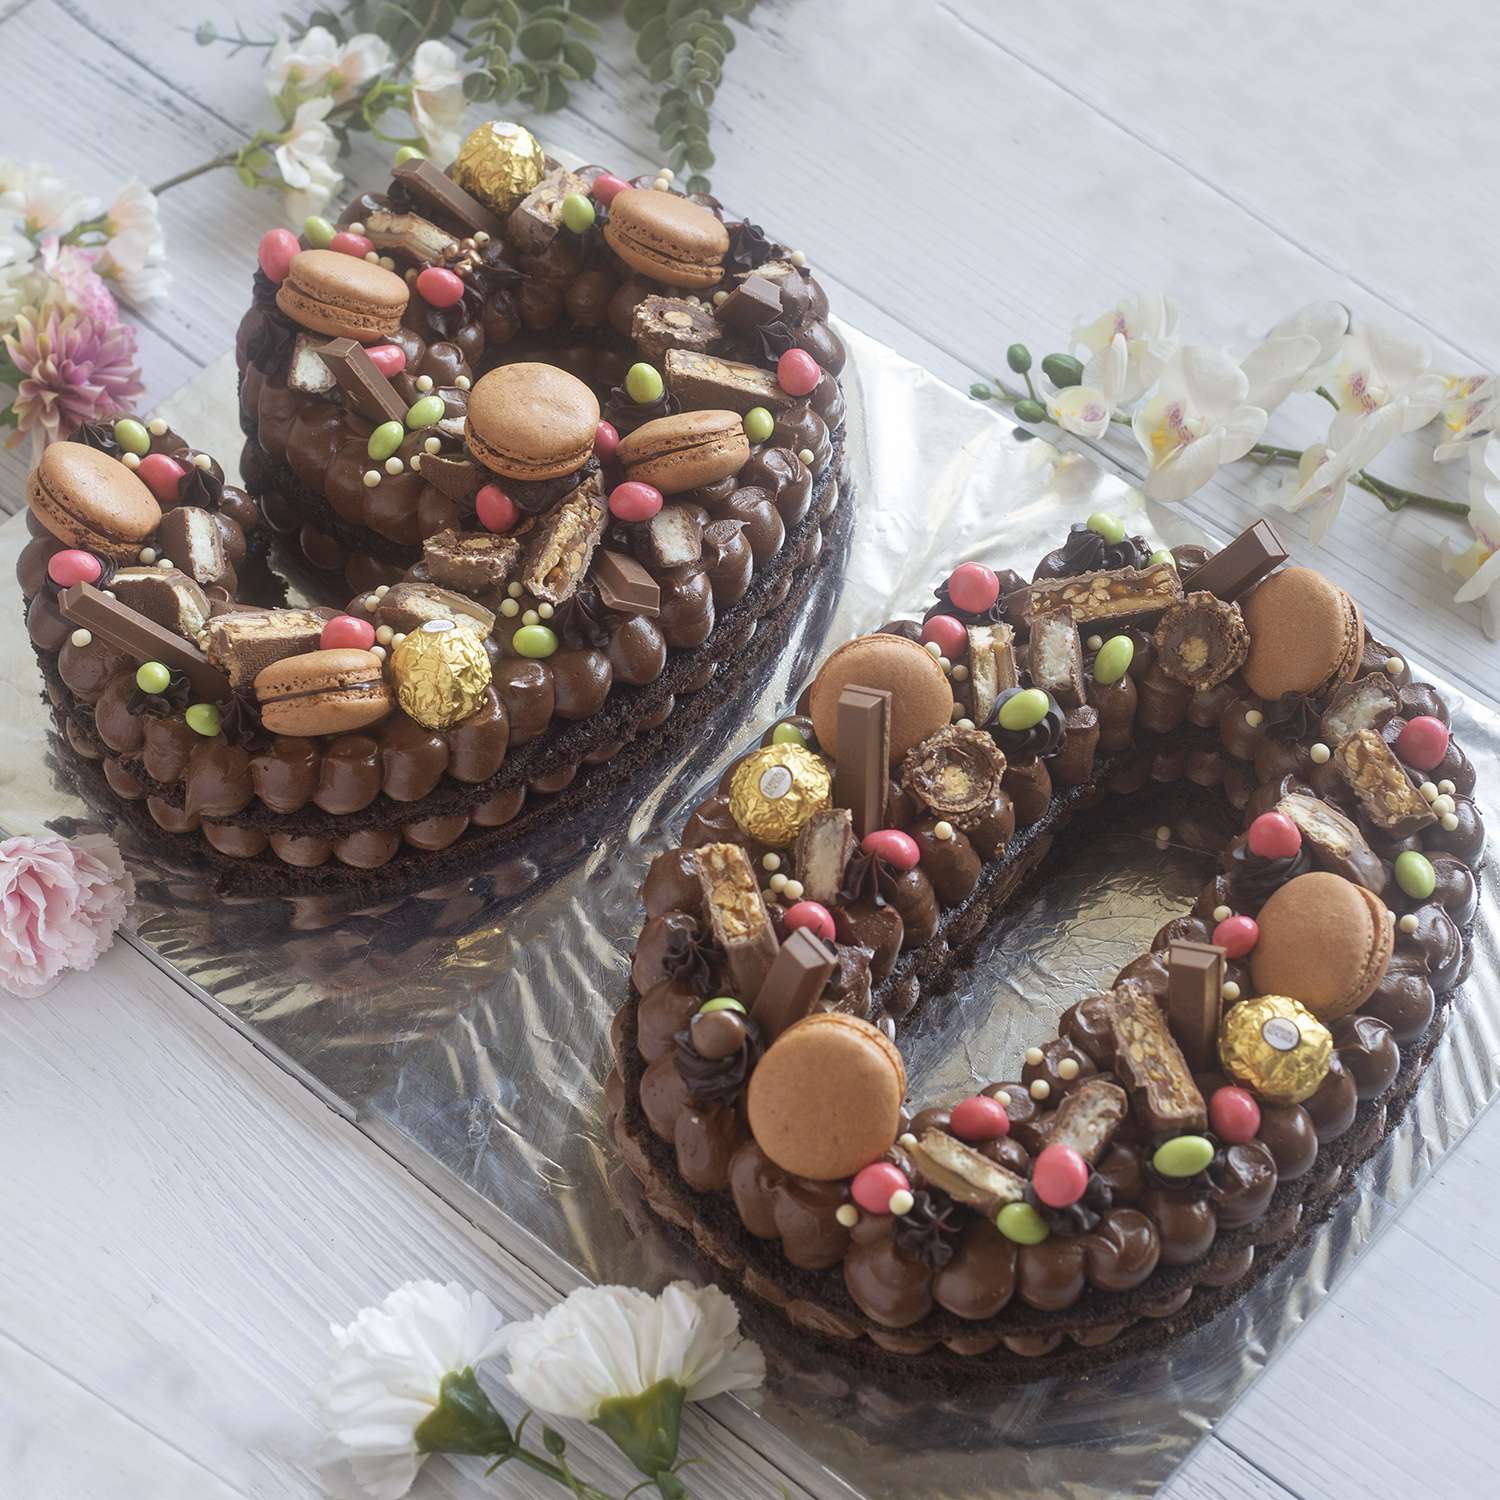 Chocolate Fruit Basket Cake Recipe: How to Make It